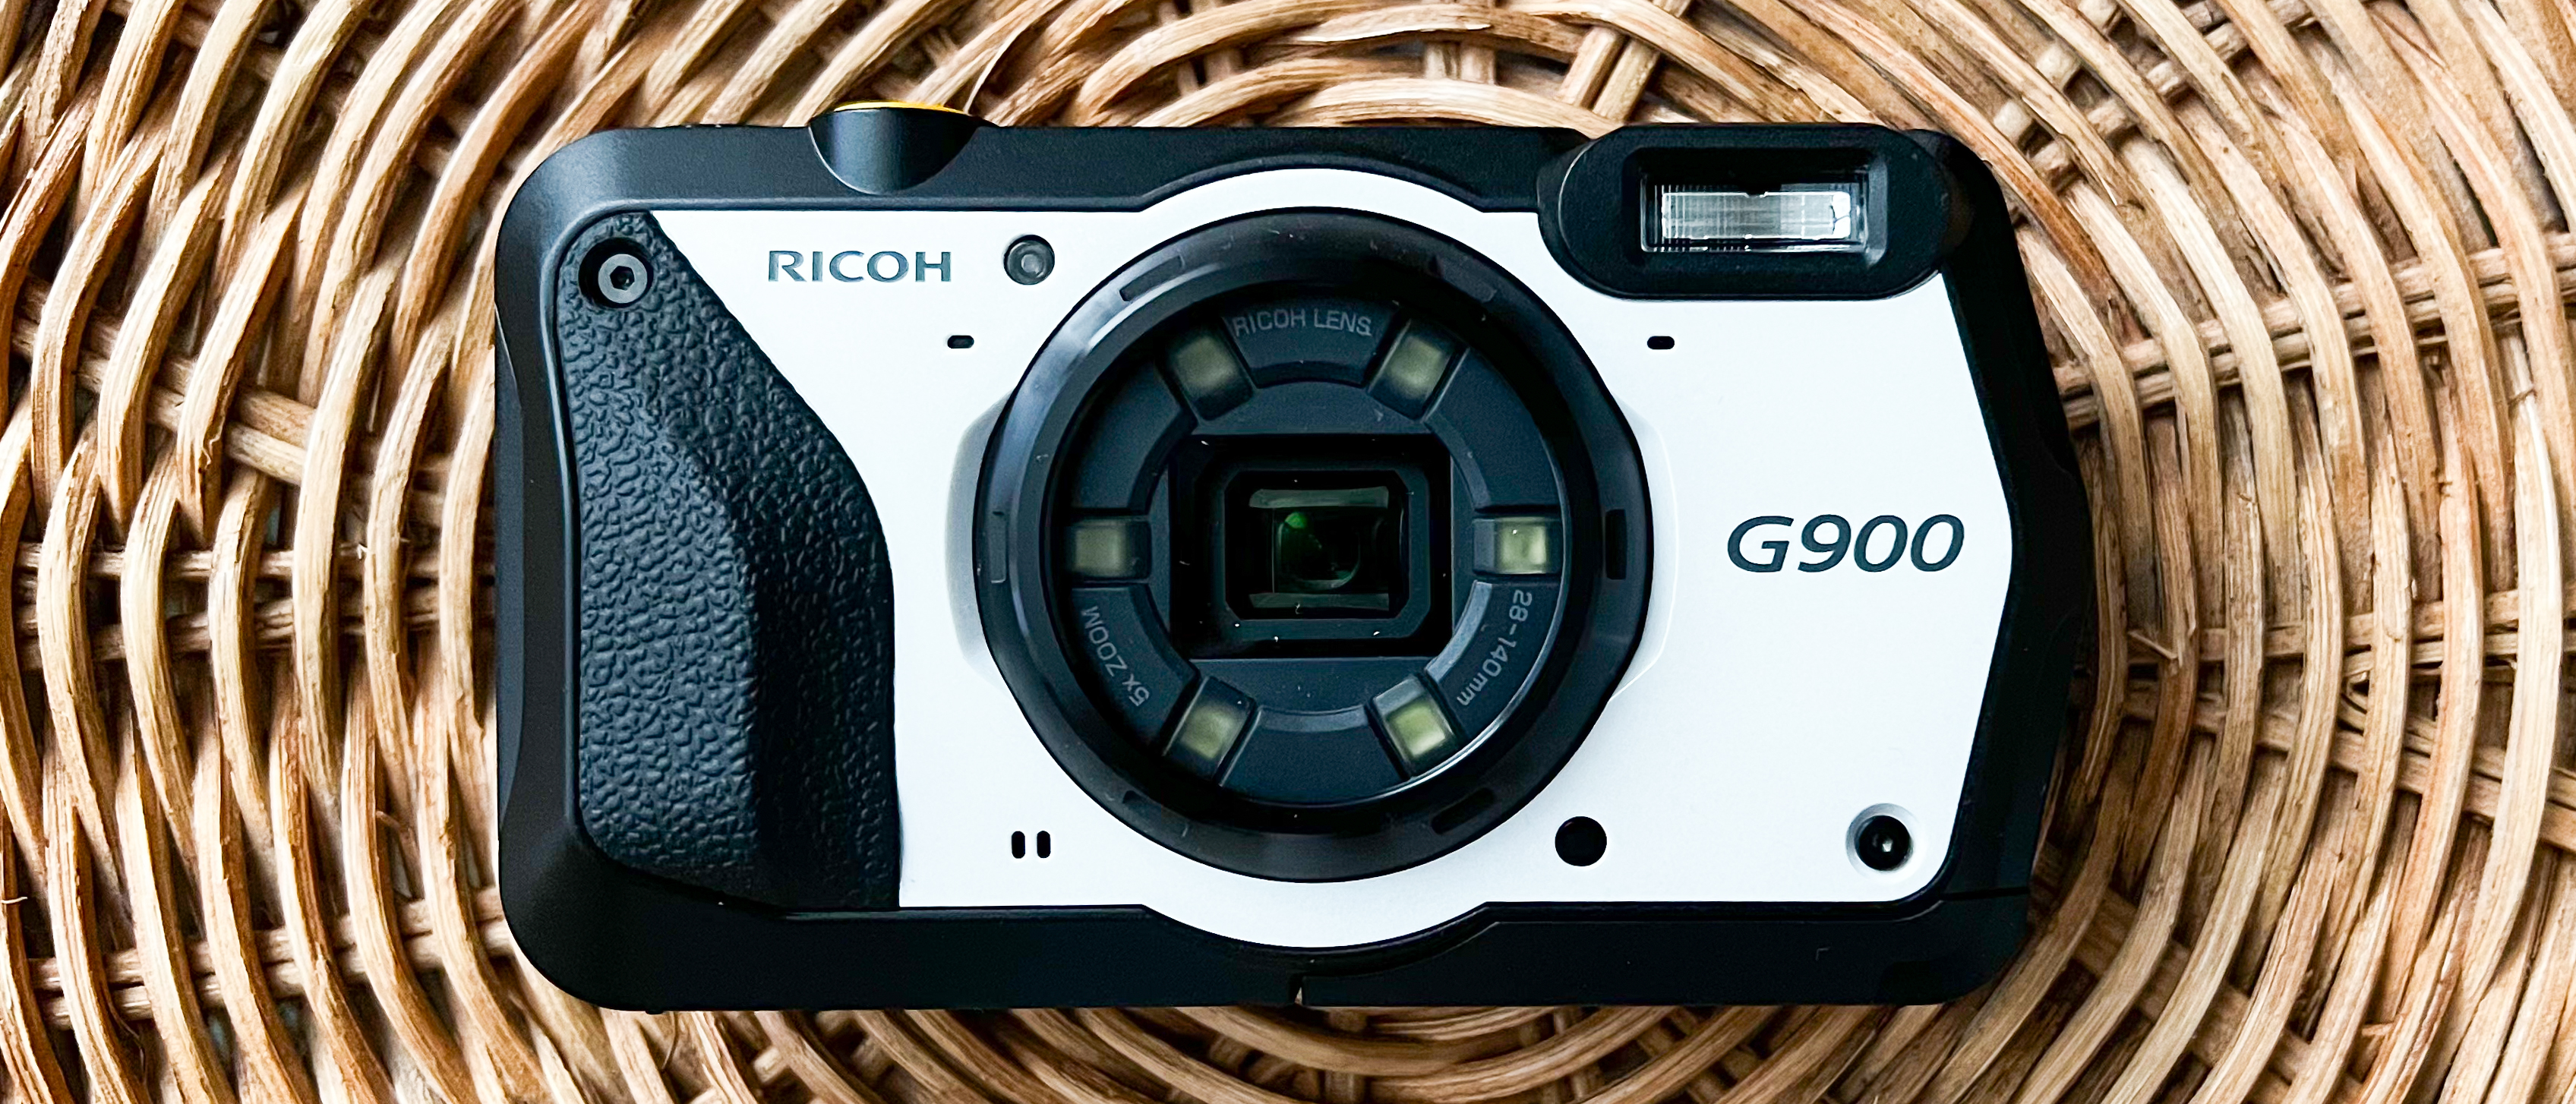 Ricoh G900 review | Digital Camera World